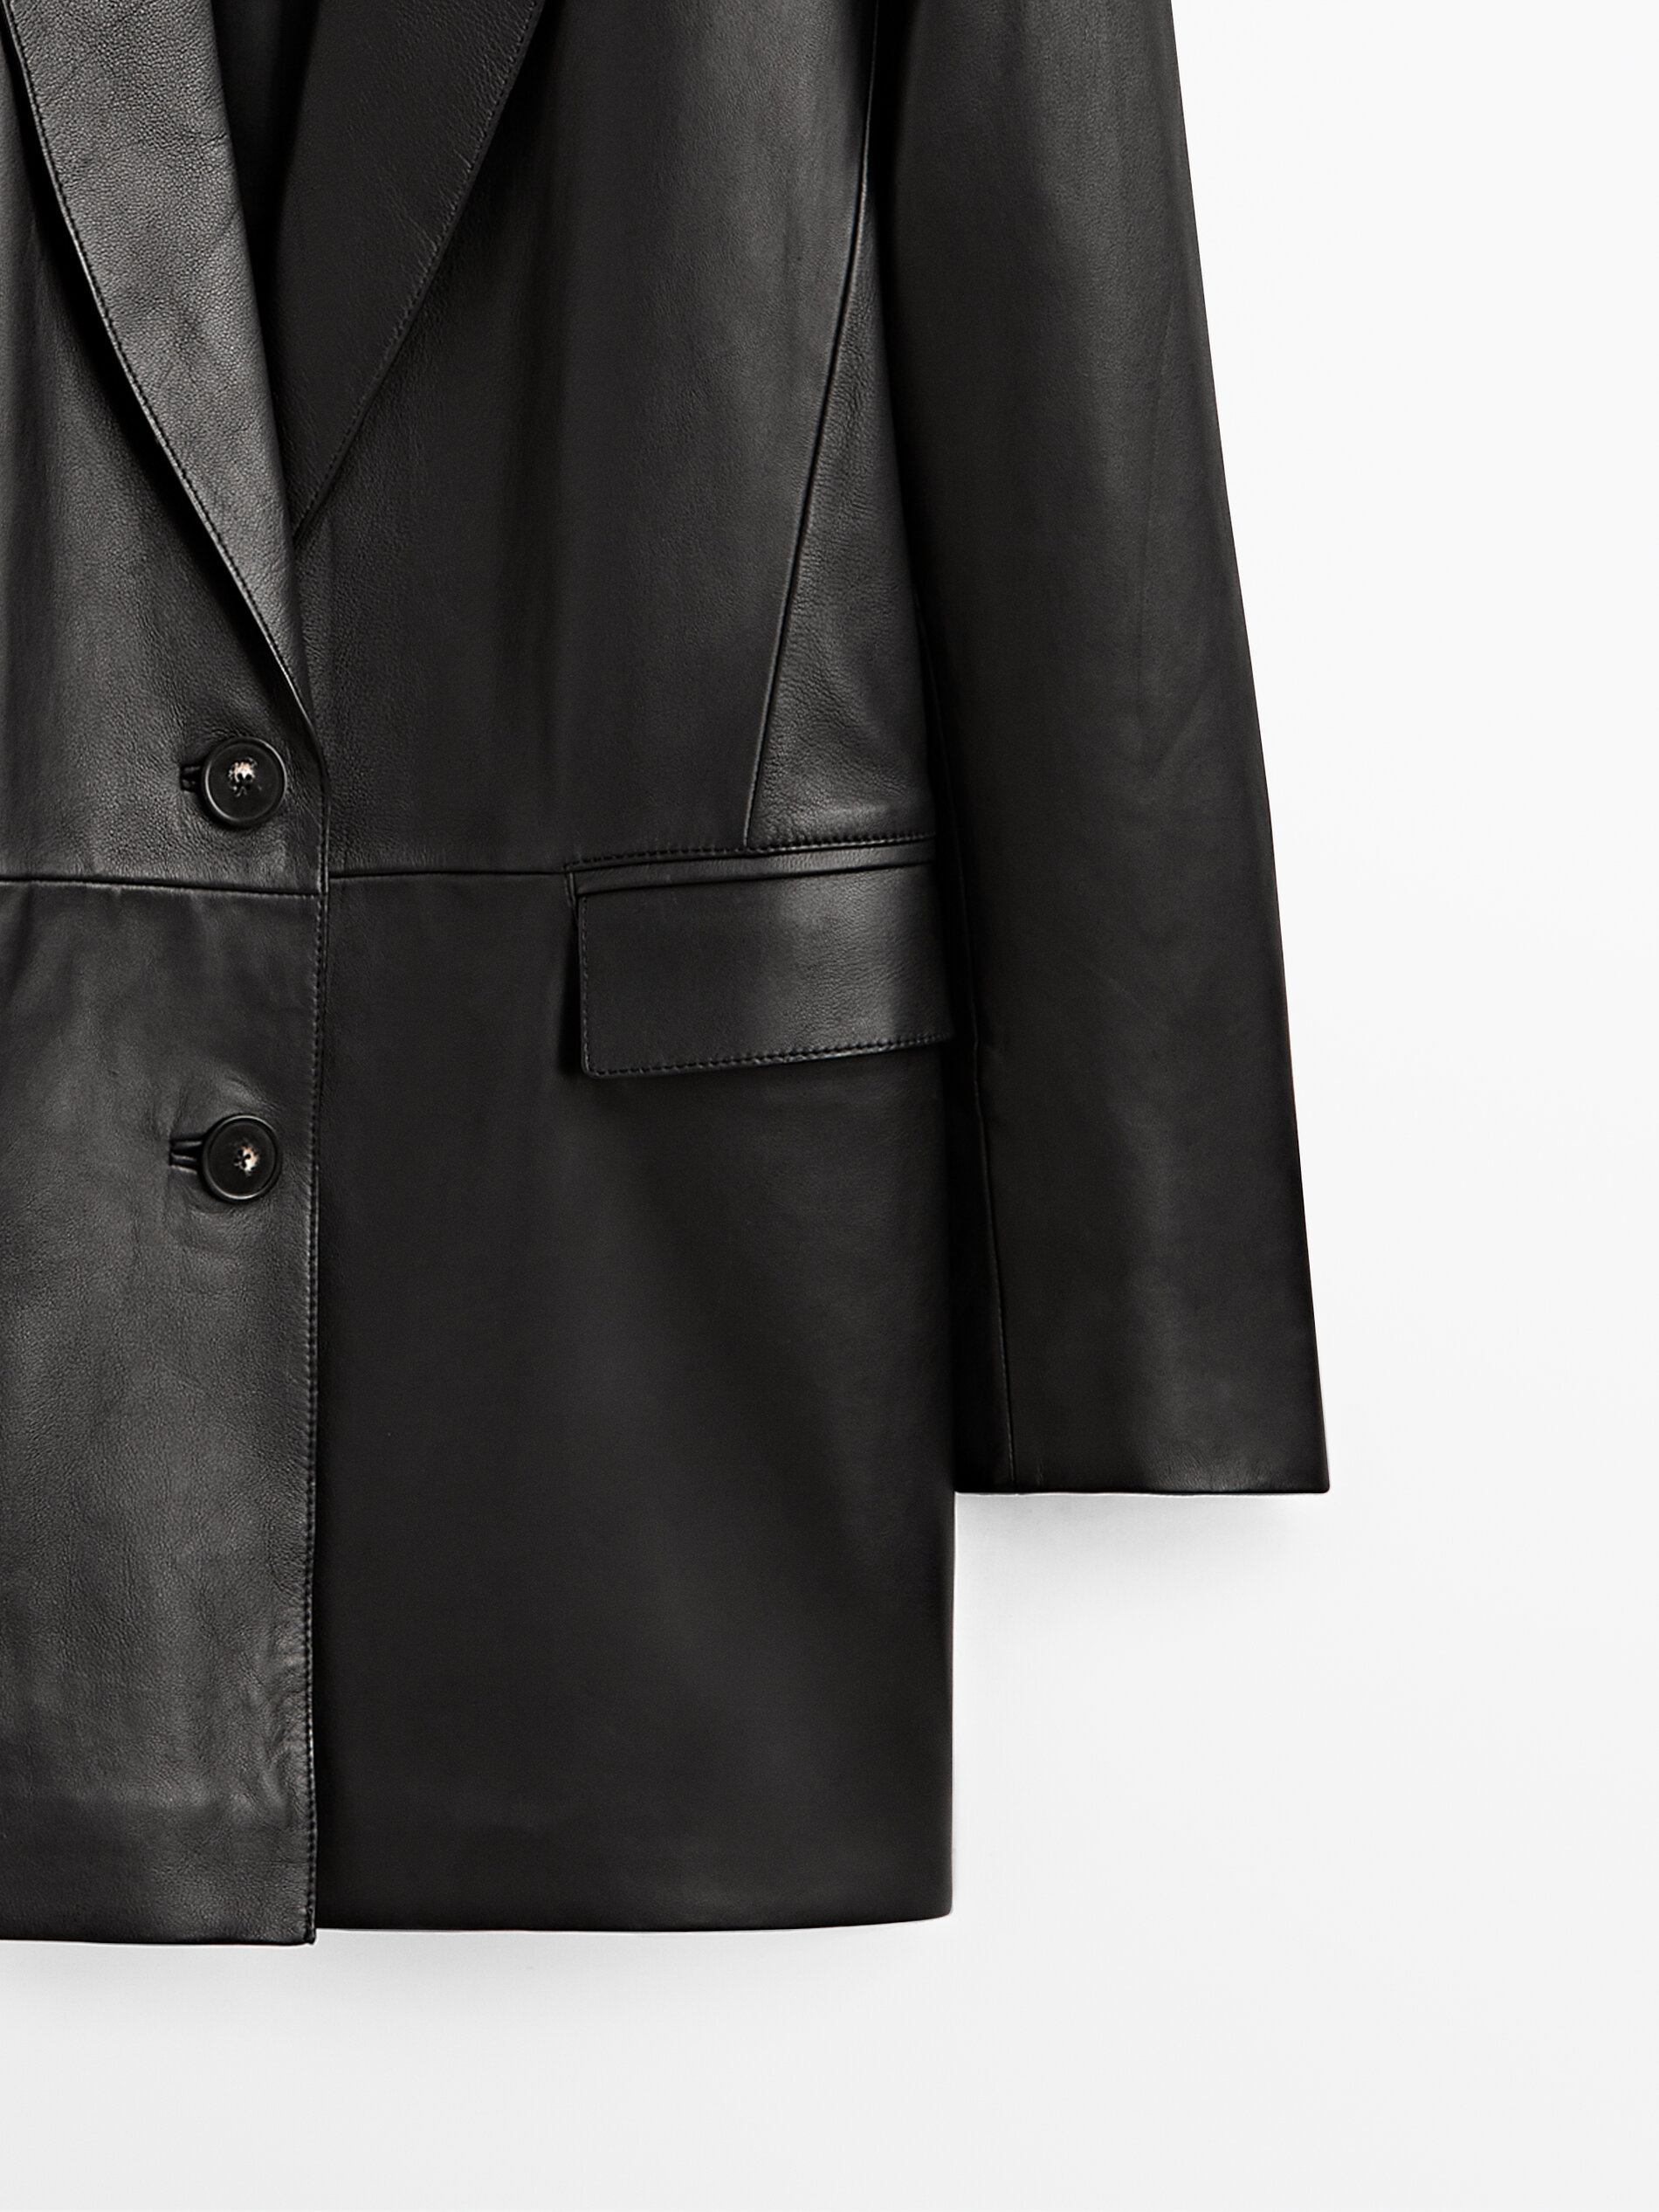 Black nappa leather blazer - Massimo Dutti Slovenia